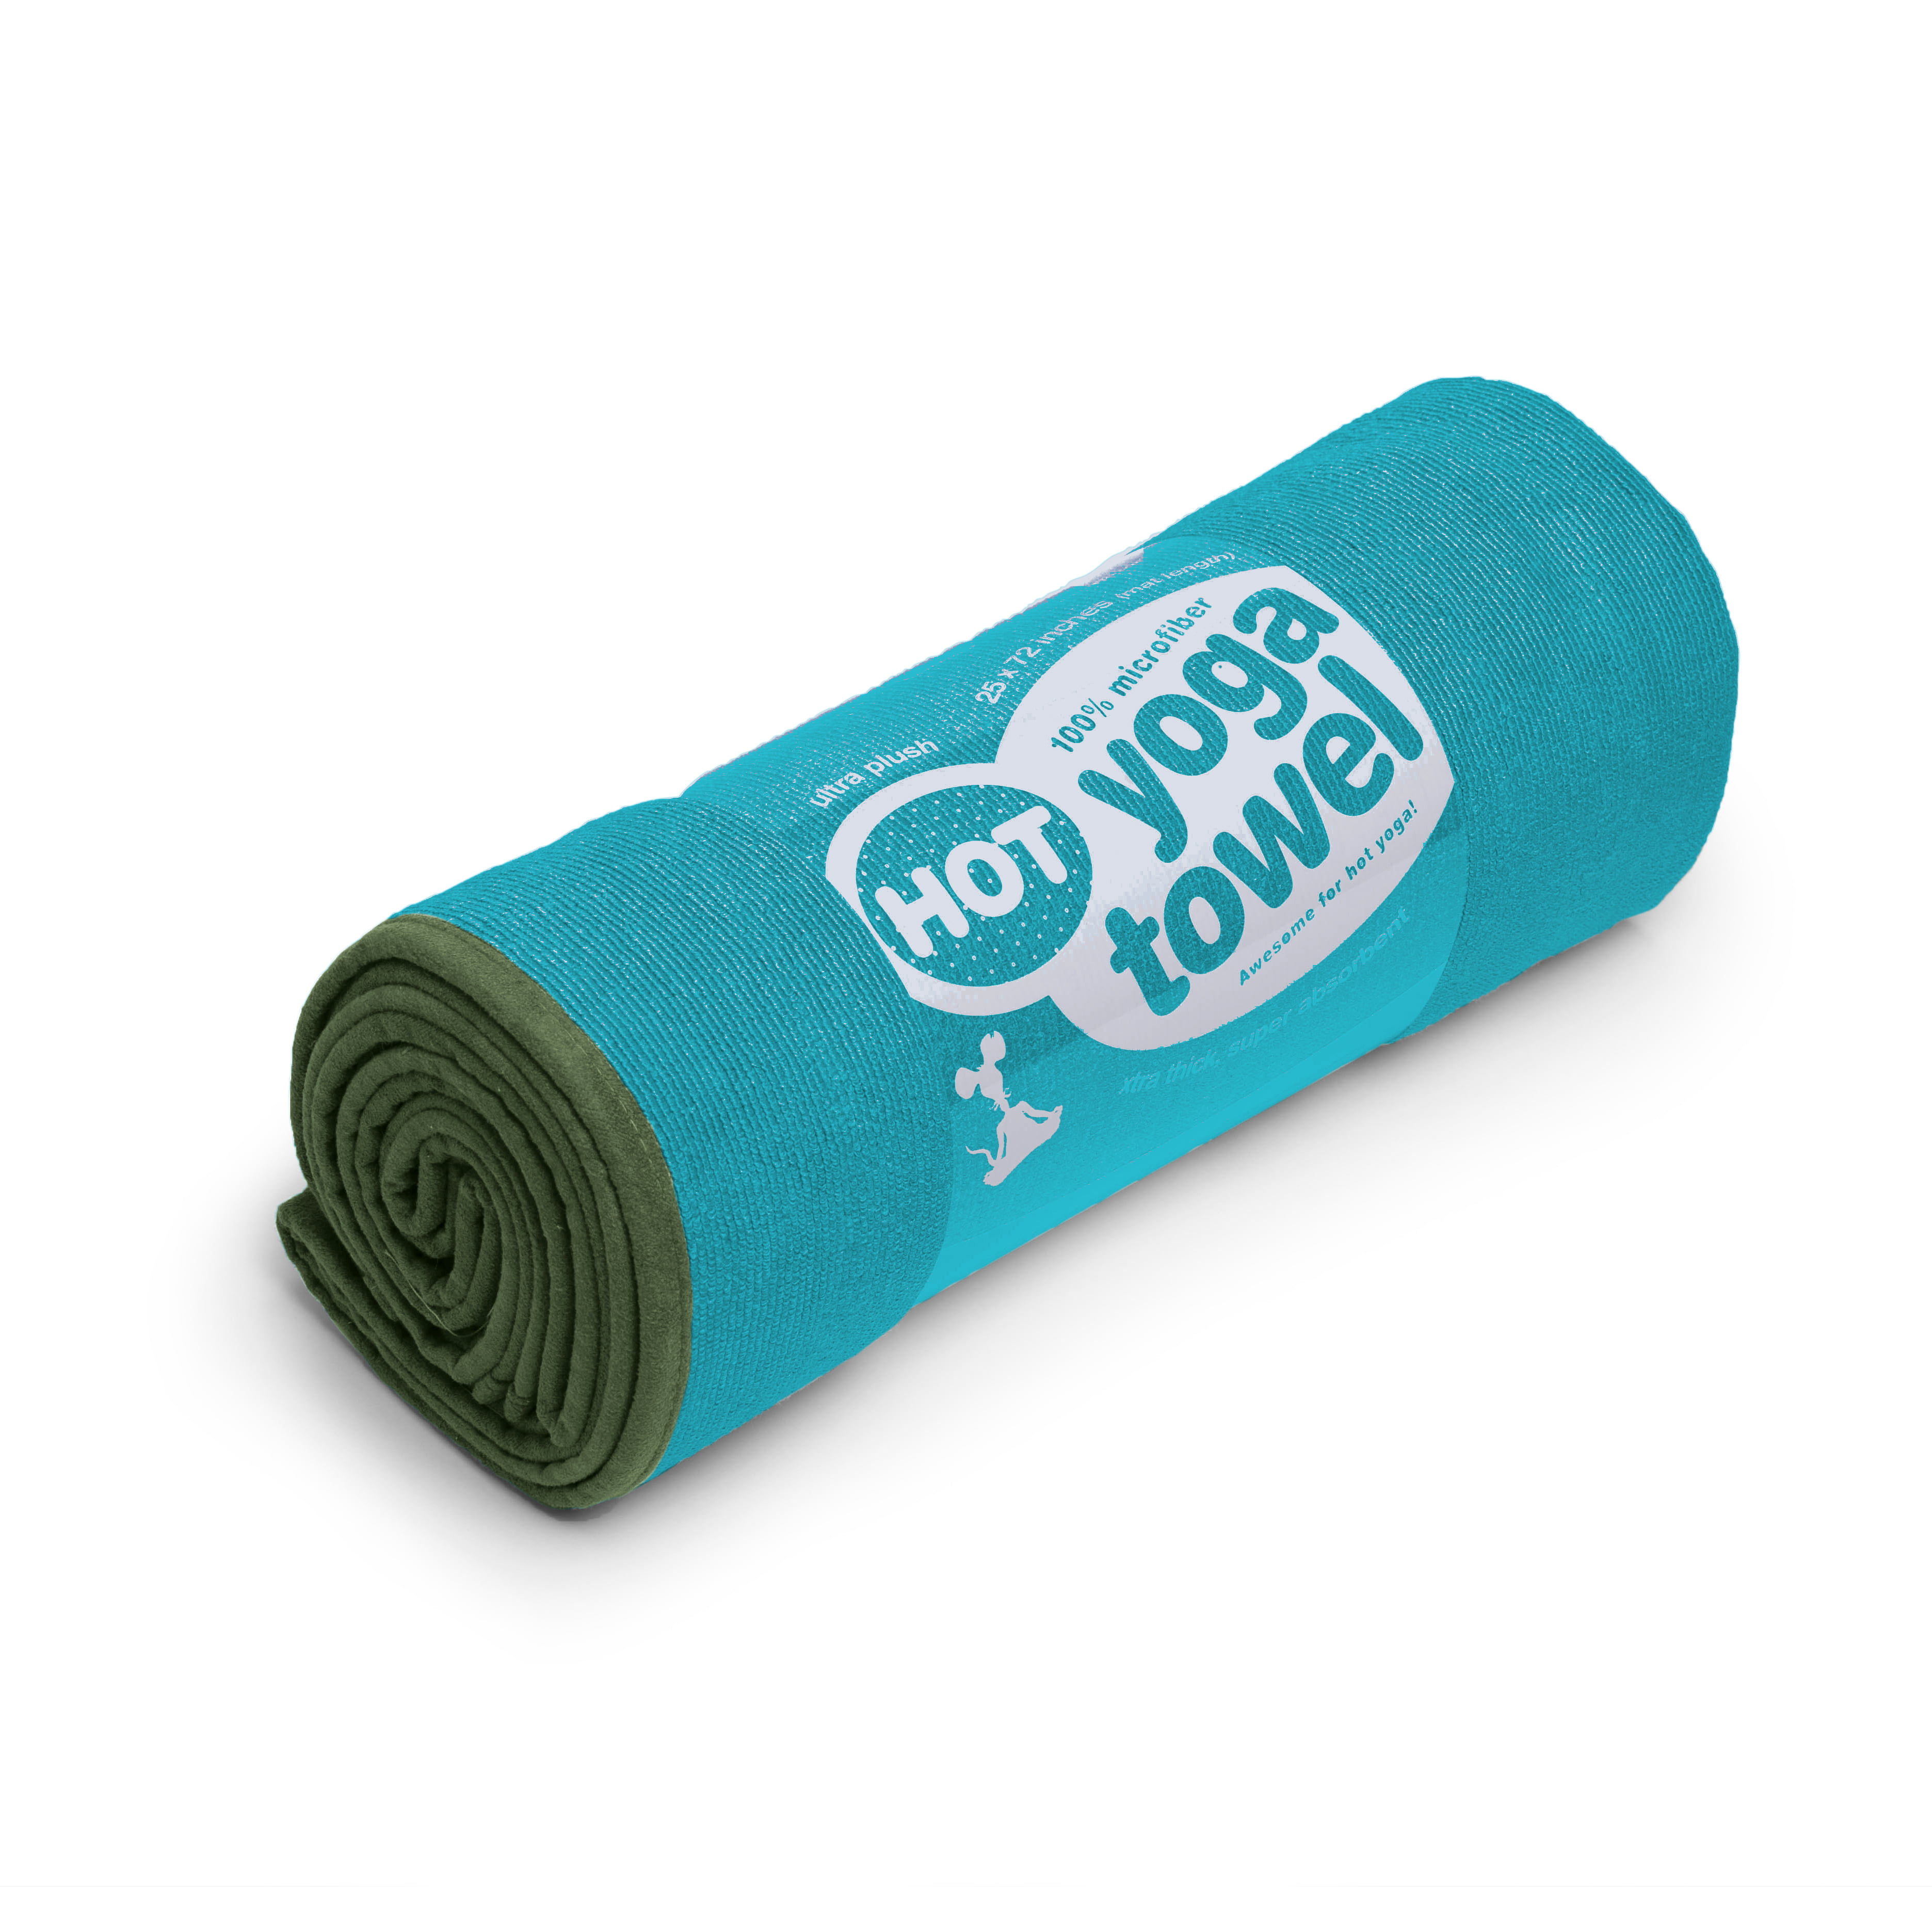 Sweat Absorbent Non-Slip for Hot Yoga Grip Dots,Light Blue Yoga Towel,Hot Yoga Mat Towel Pilates and Workout 24 x72 